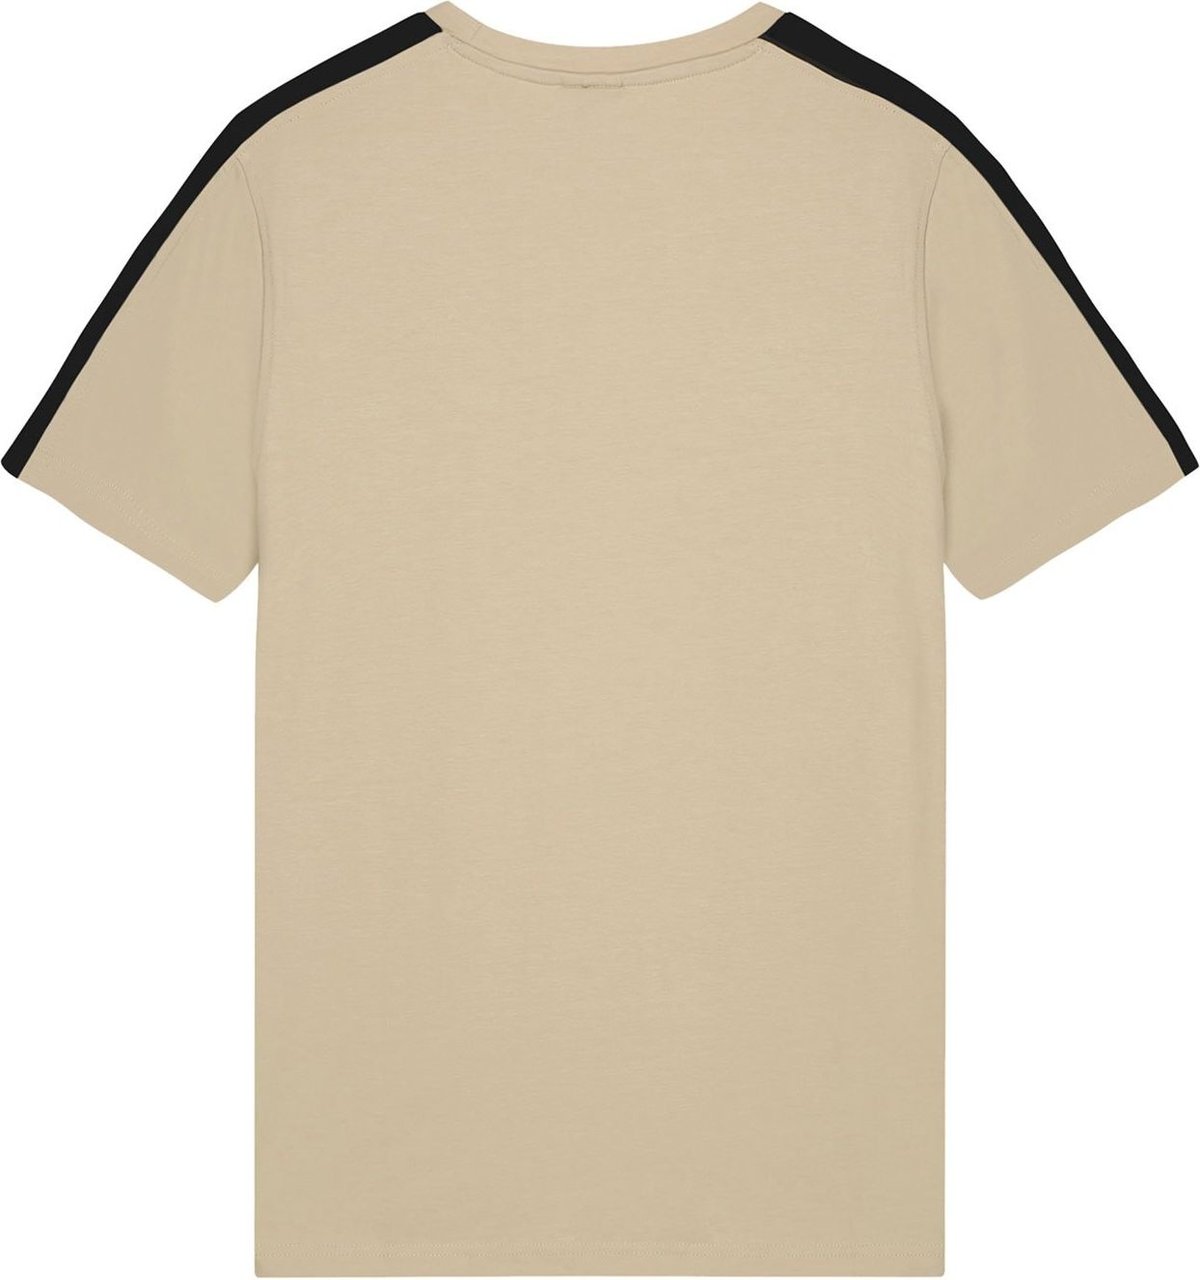 Malelions Academy T-Shirt - Sand/Black Beige